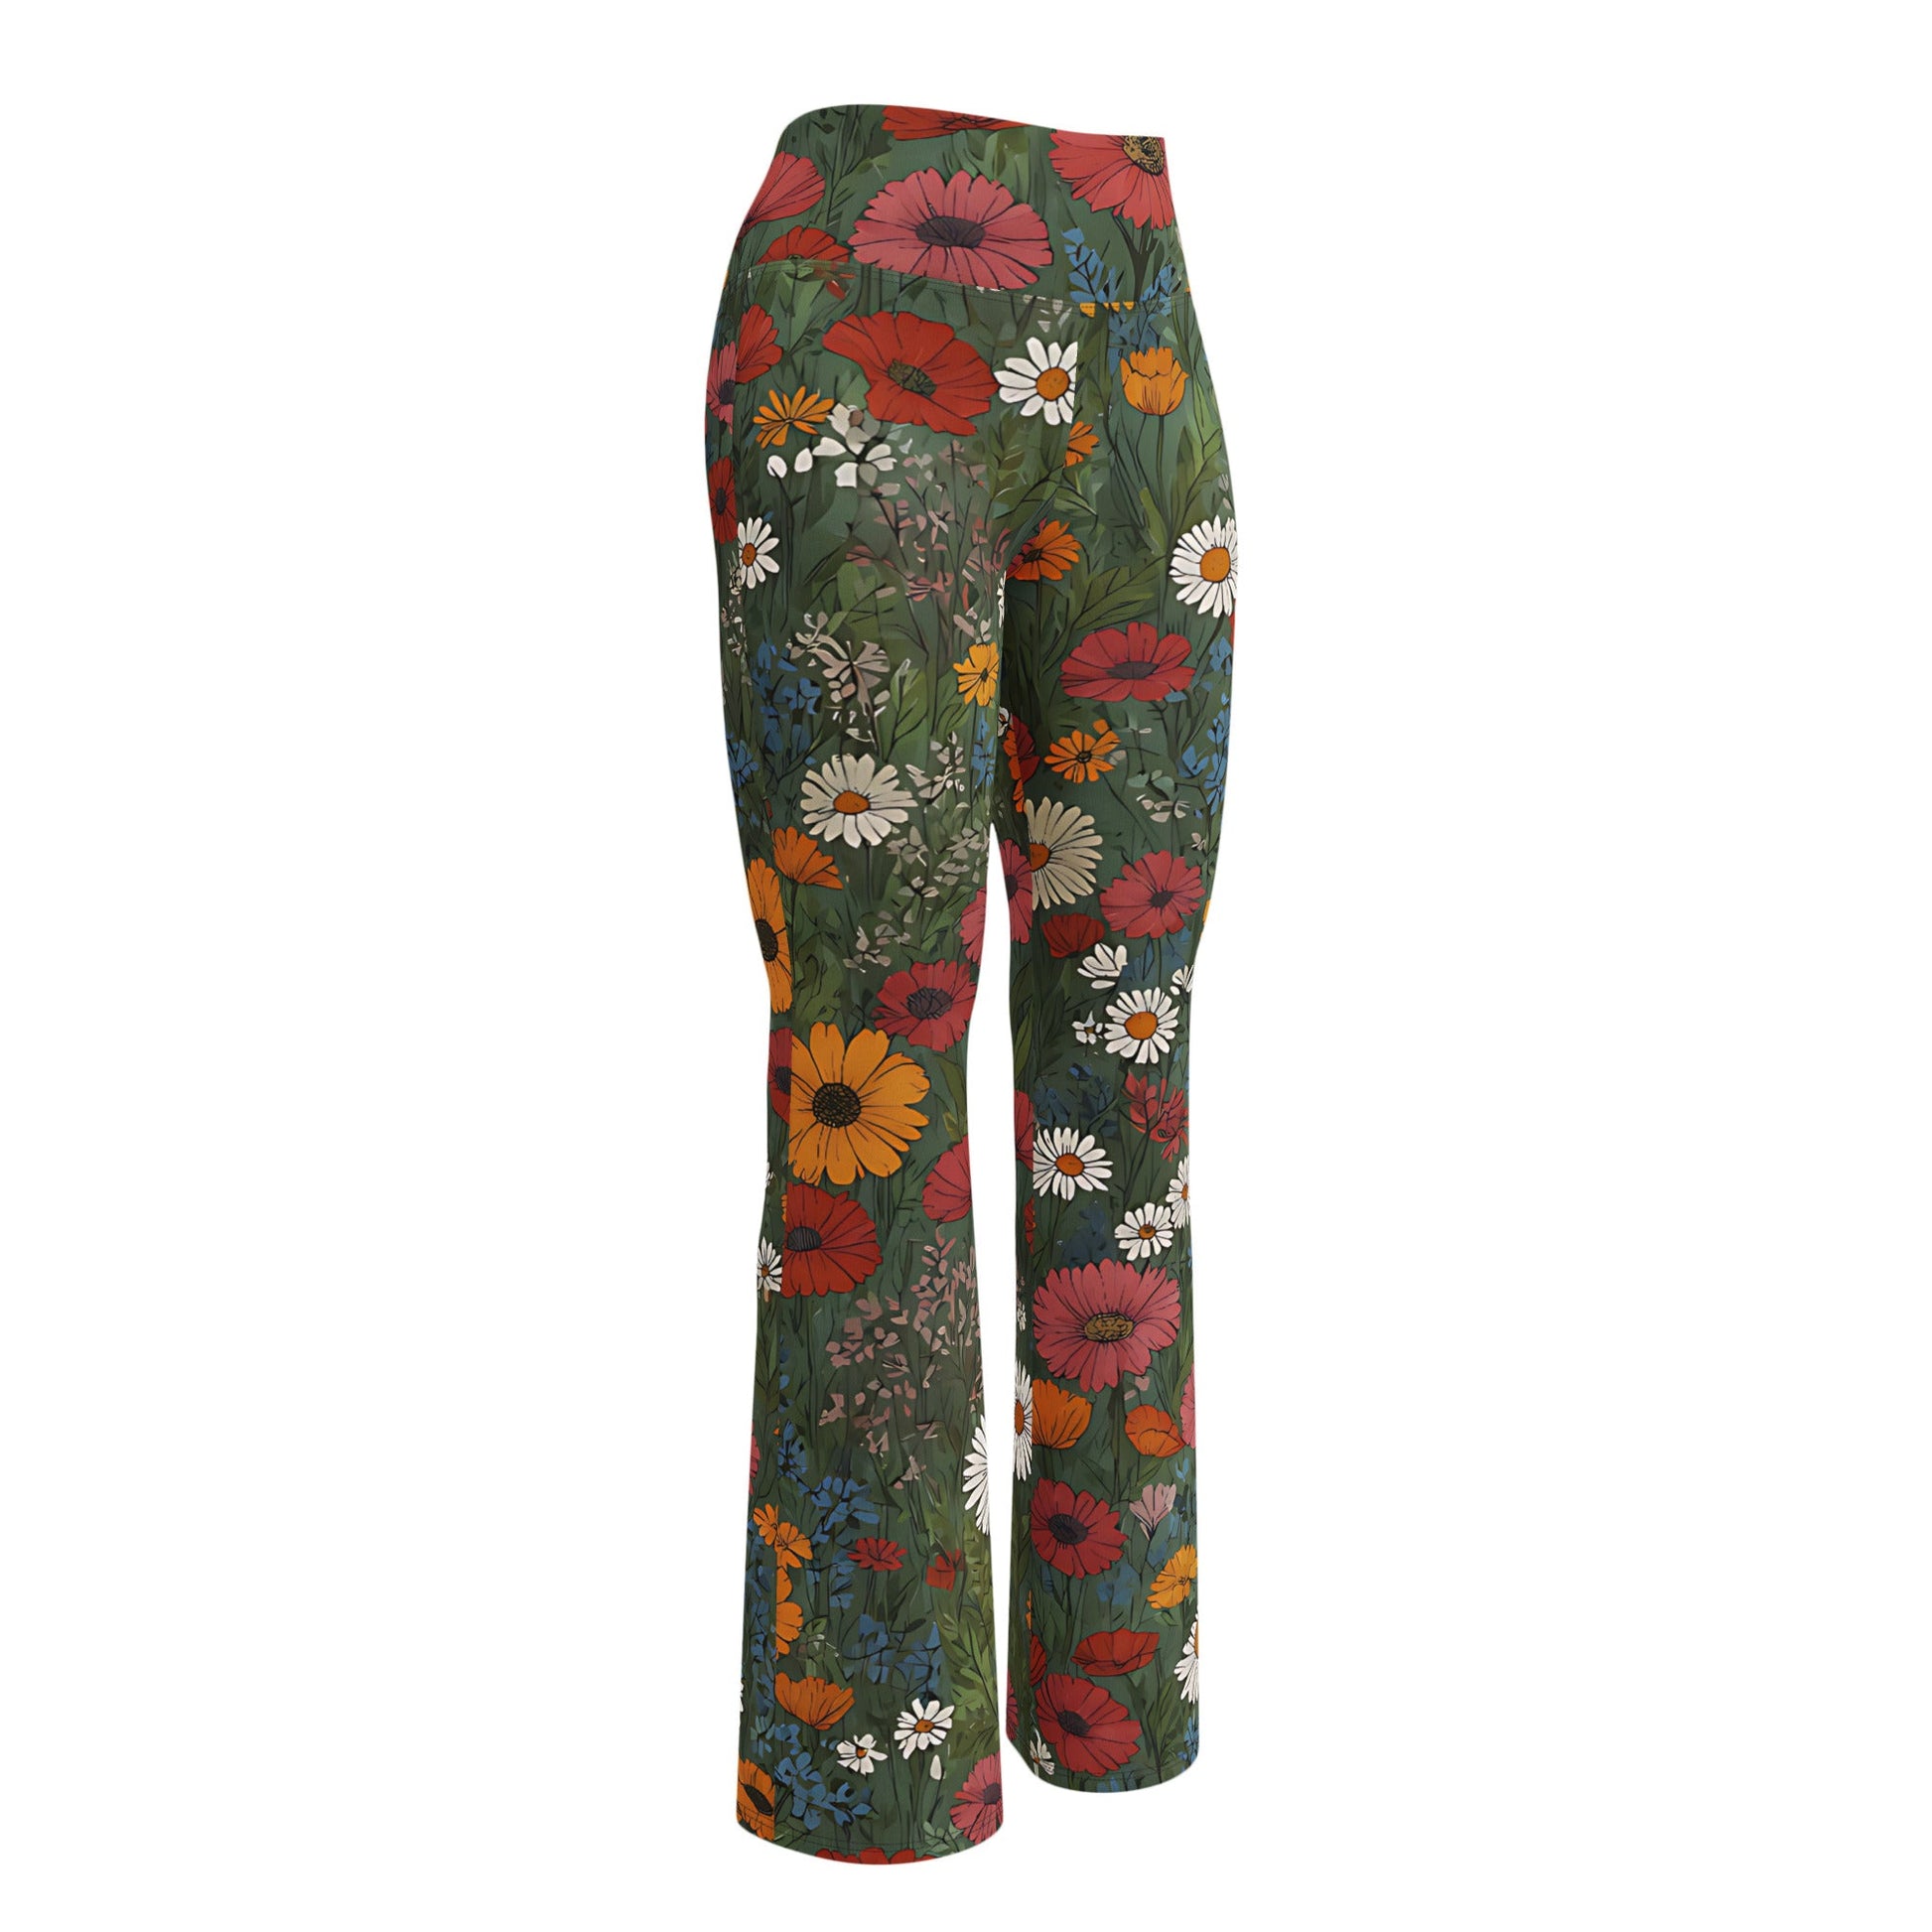 Wildflower Meadow' Flare leggings with pockets - Wild Wisp Apparel